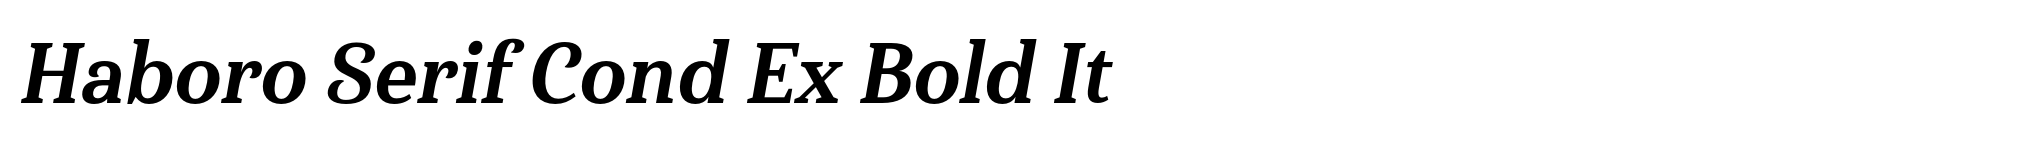 Haboro Serif Cond Ex Bold It image